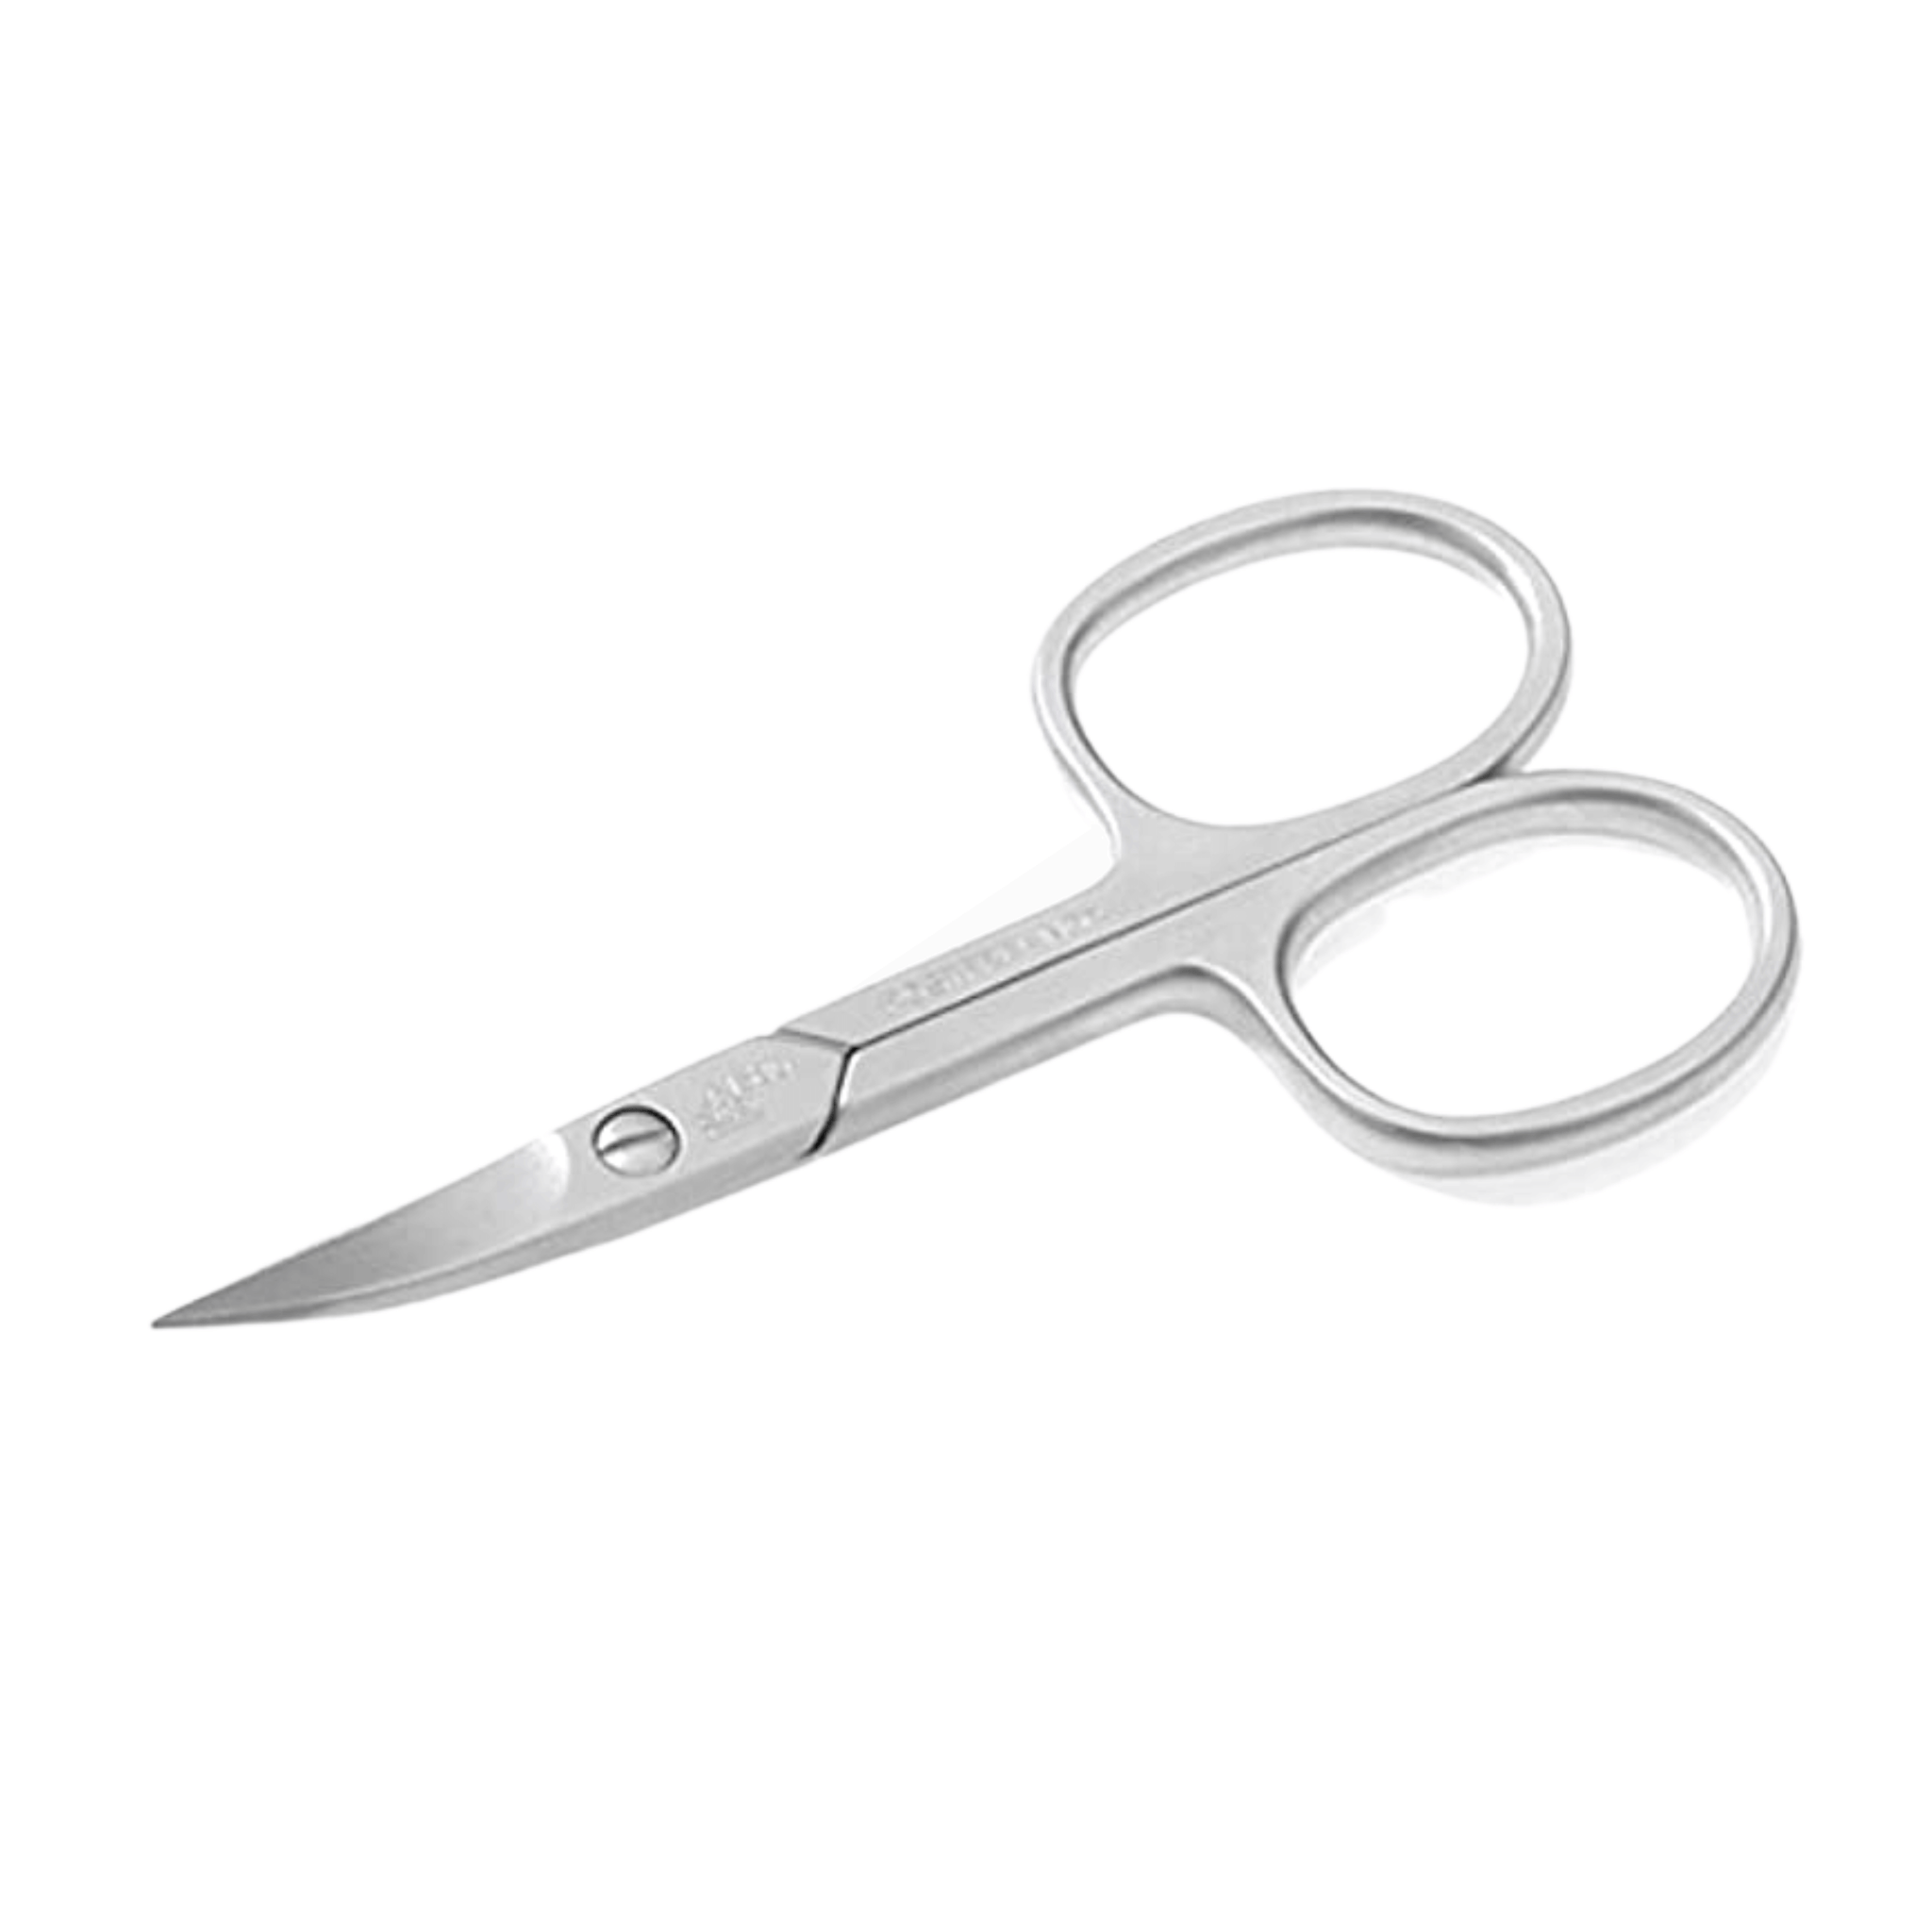 Basic Nail Scissors- Curved, 9 cm